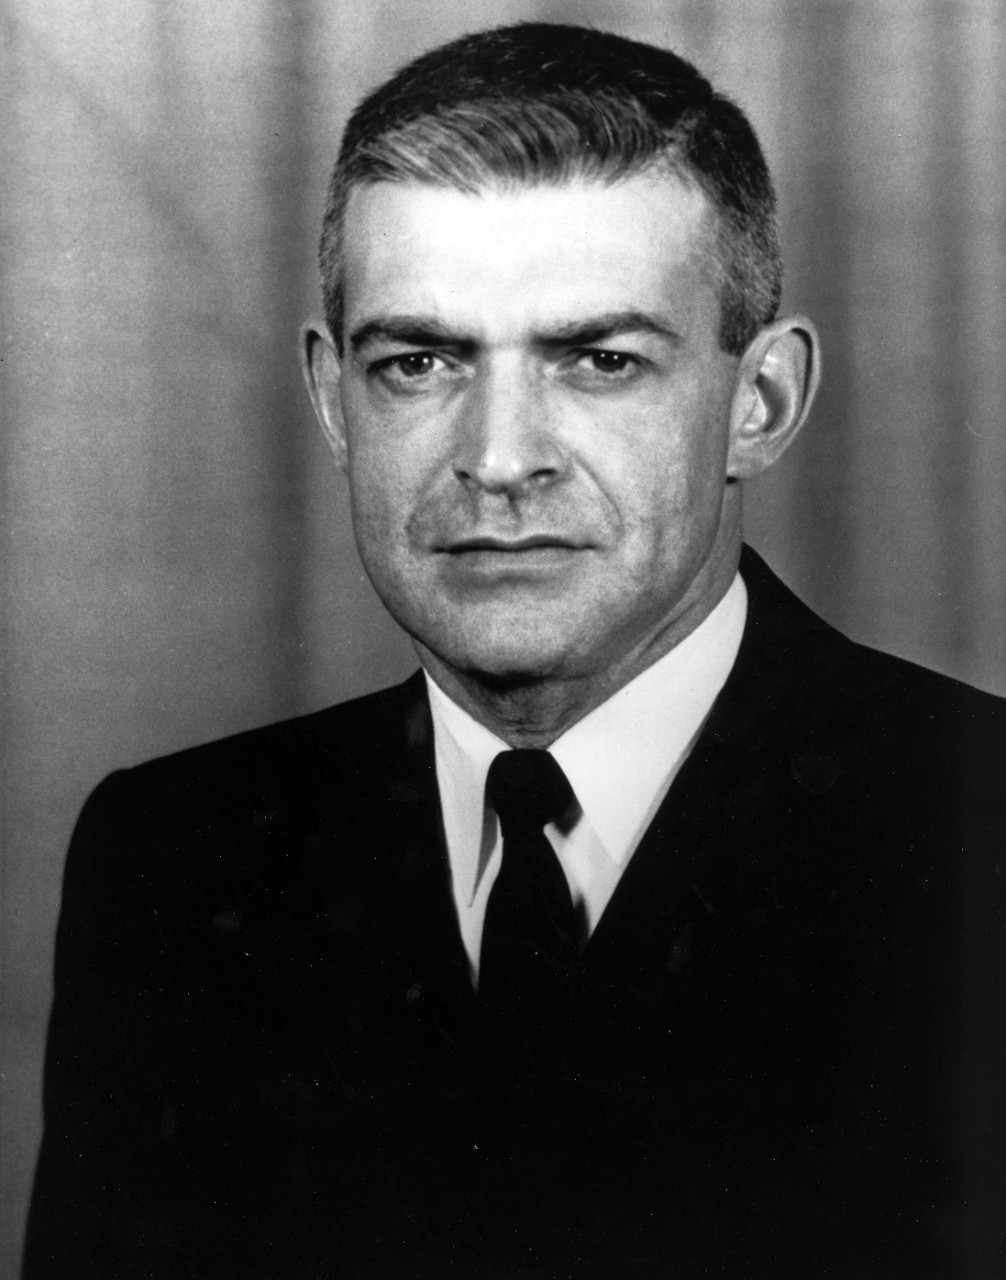 LT Vincent R. Capodanno, USNR - February 16, 1966. 